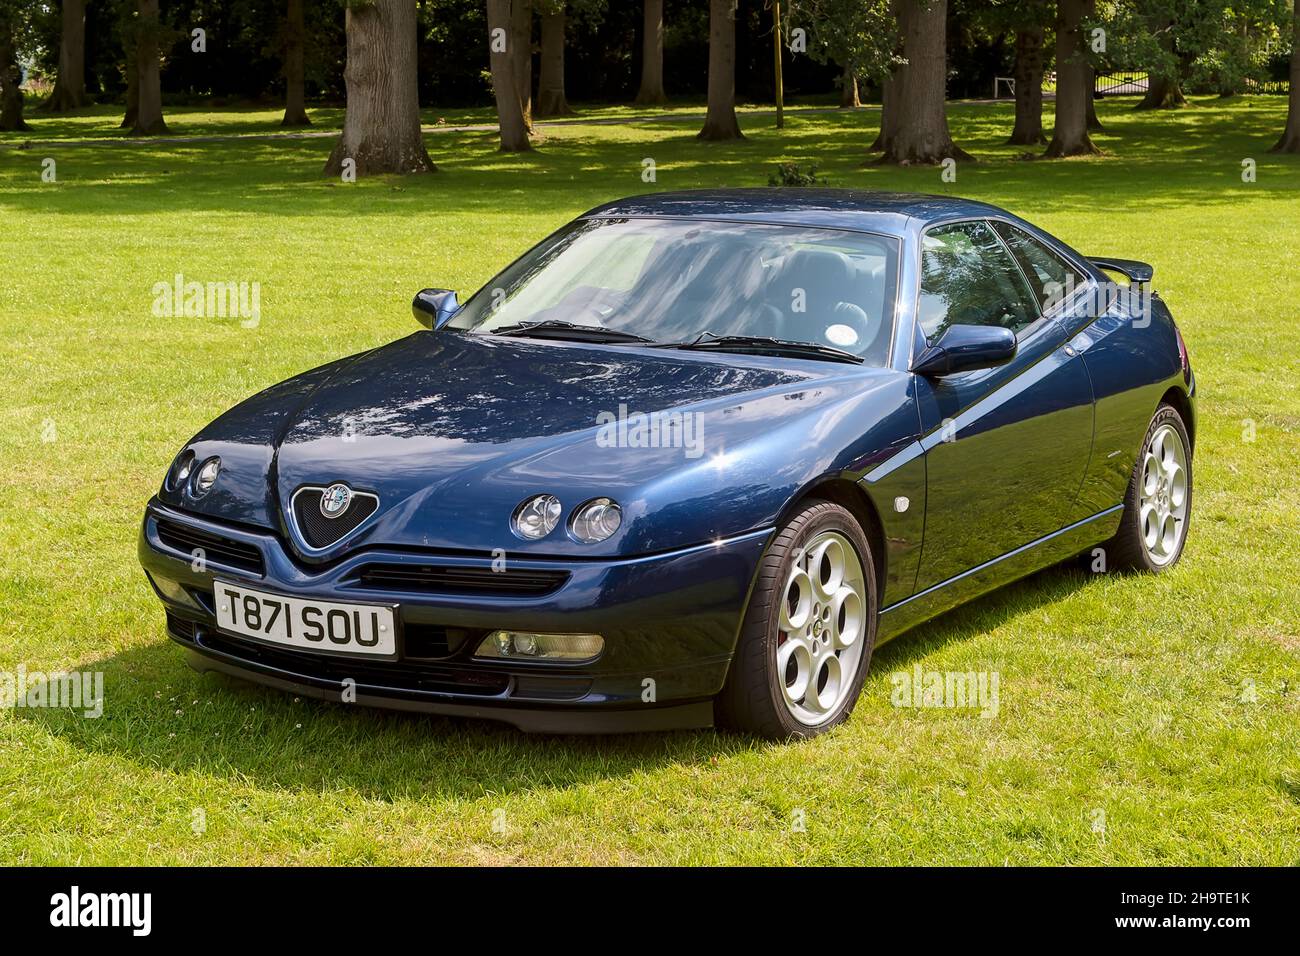 Longleat House, Wiltshire, UK - July 25 2004: An Italian made 1999 Alfa Romeo GTV (Gran Turismo Veloce) (Phase 2) 2+2 Coupe sports car. Stock Photo